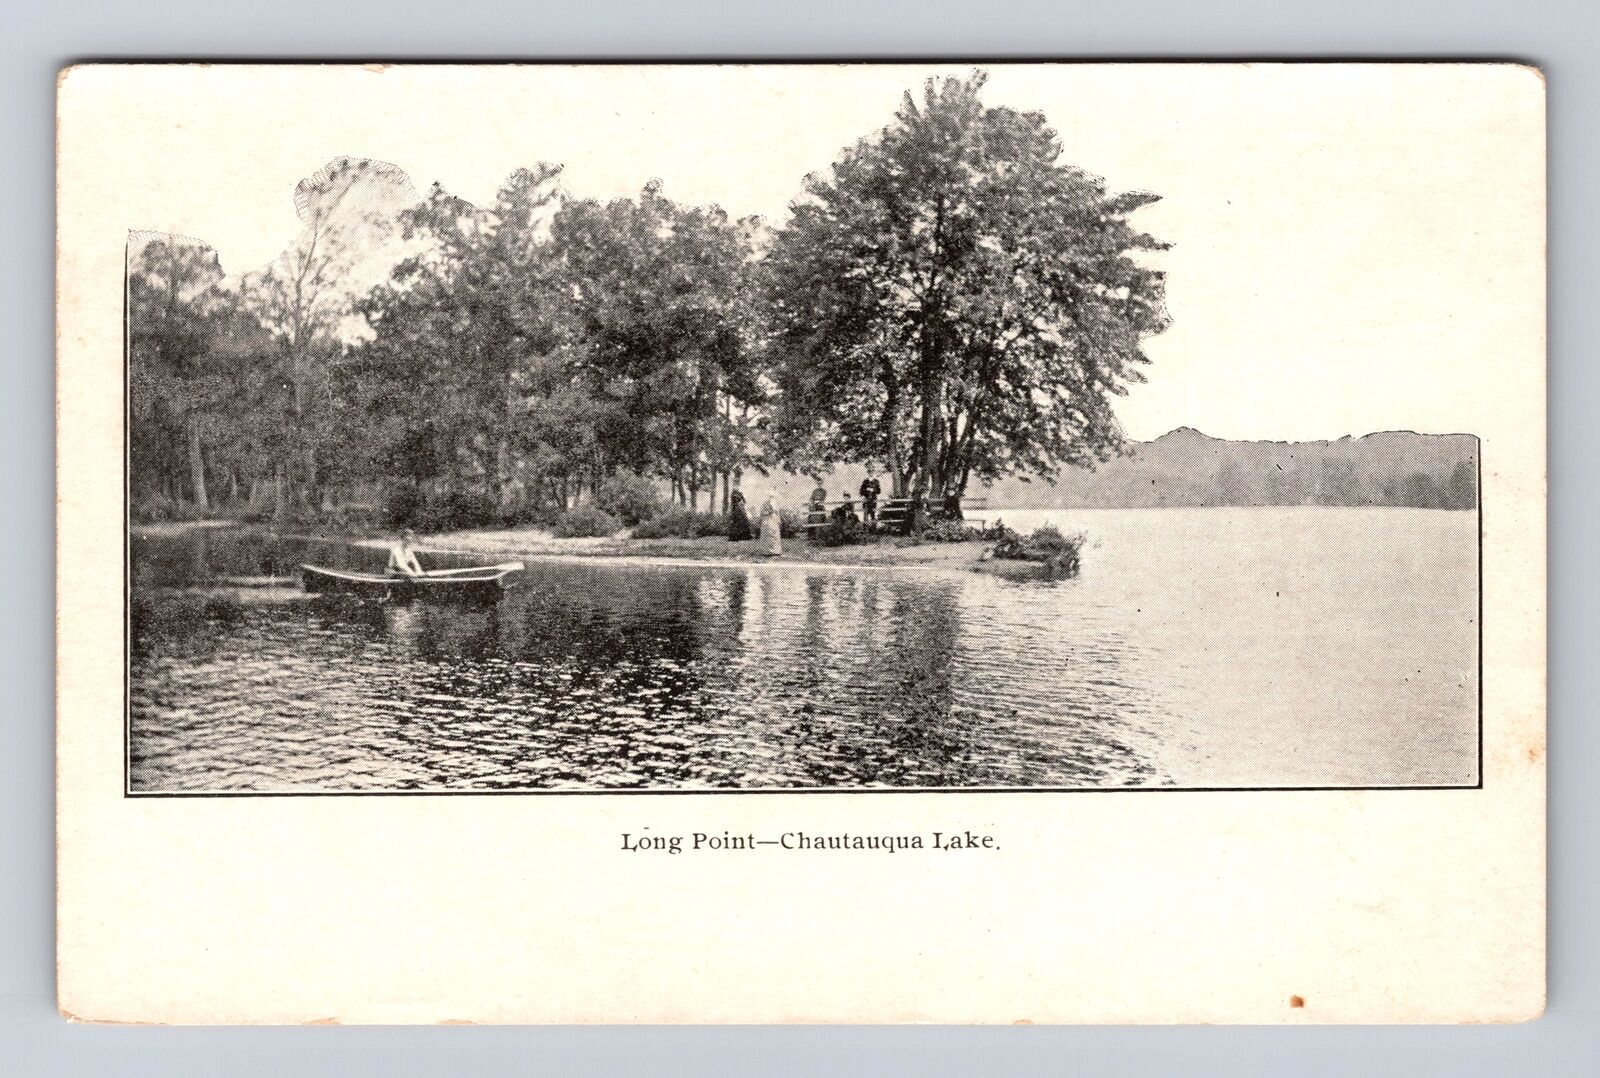 NY-New York, Long Point, Chautauqua Lake, Antique, Vintage Souvenir Postcard